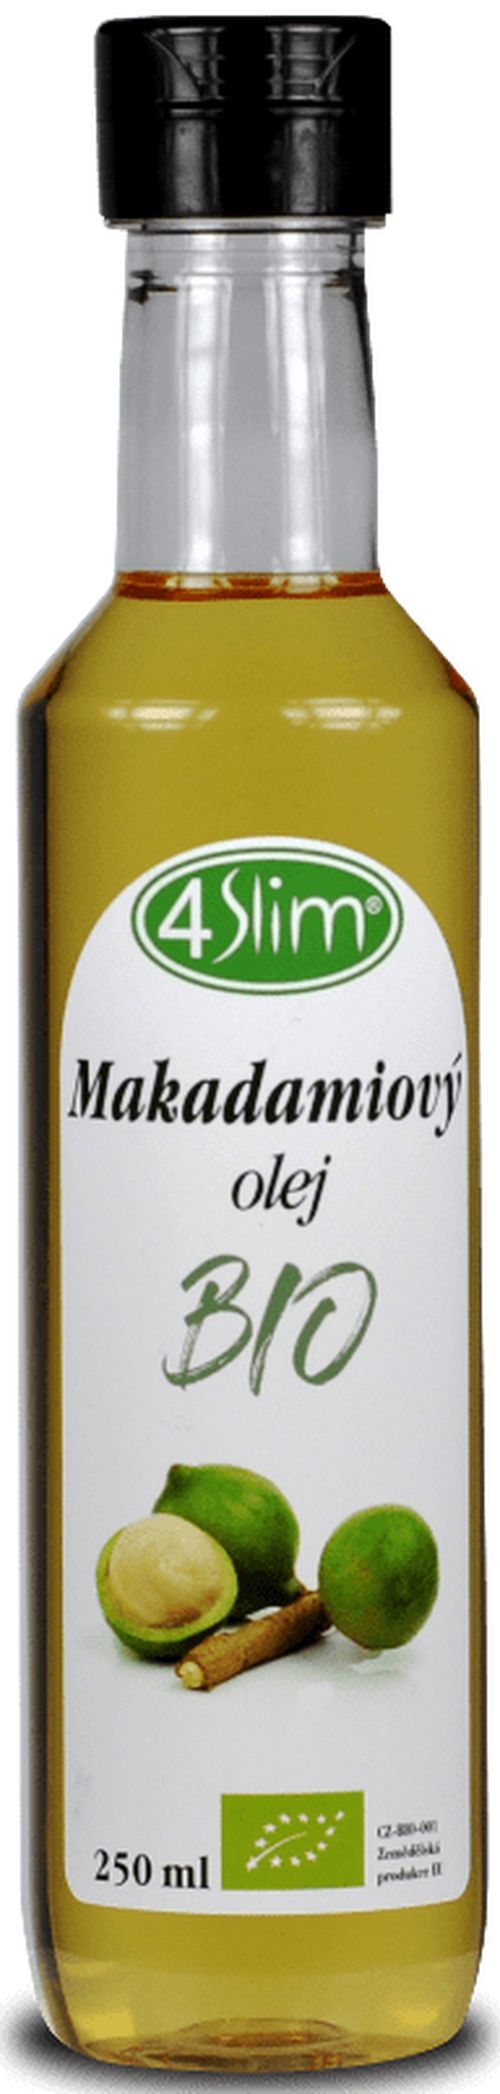 4Slim - Makadamiový olej BIO 250ml * CZ-BIO-001